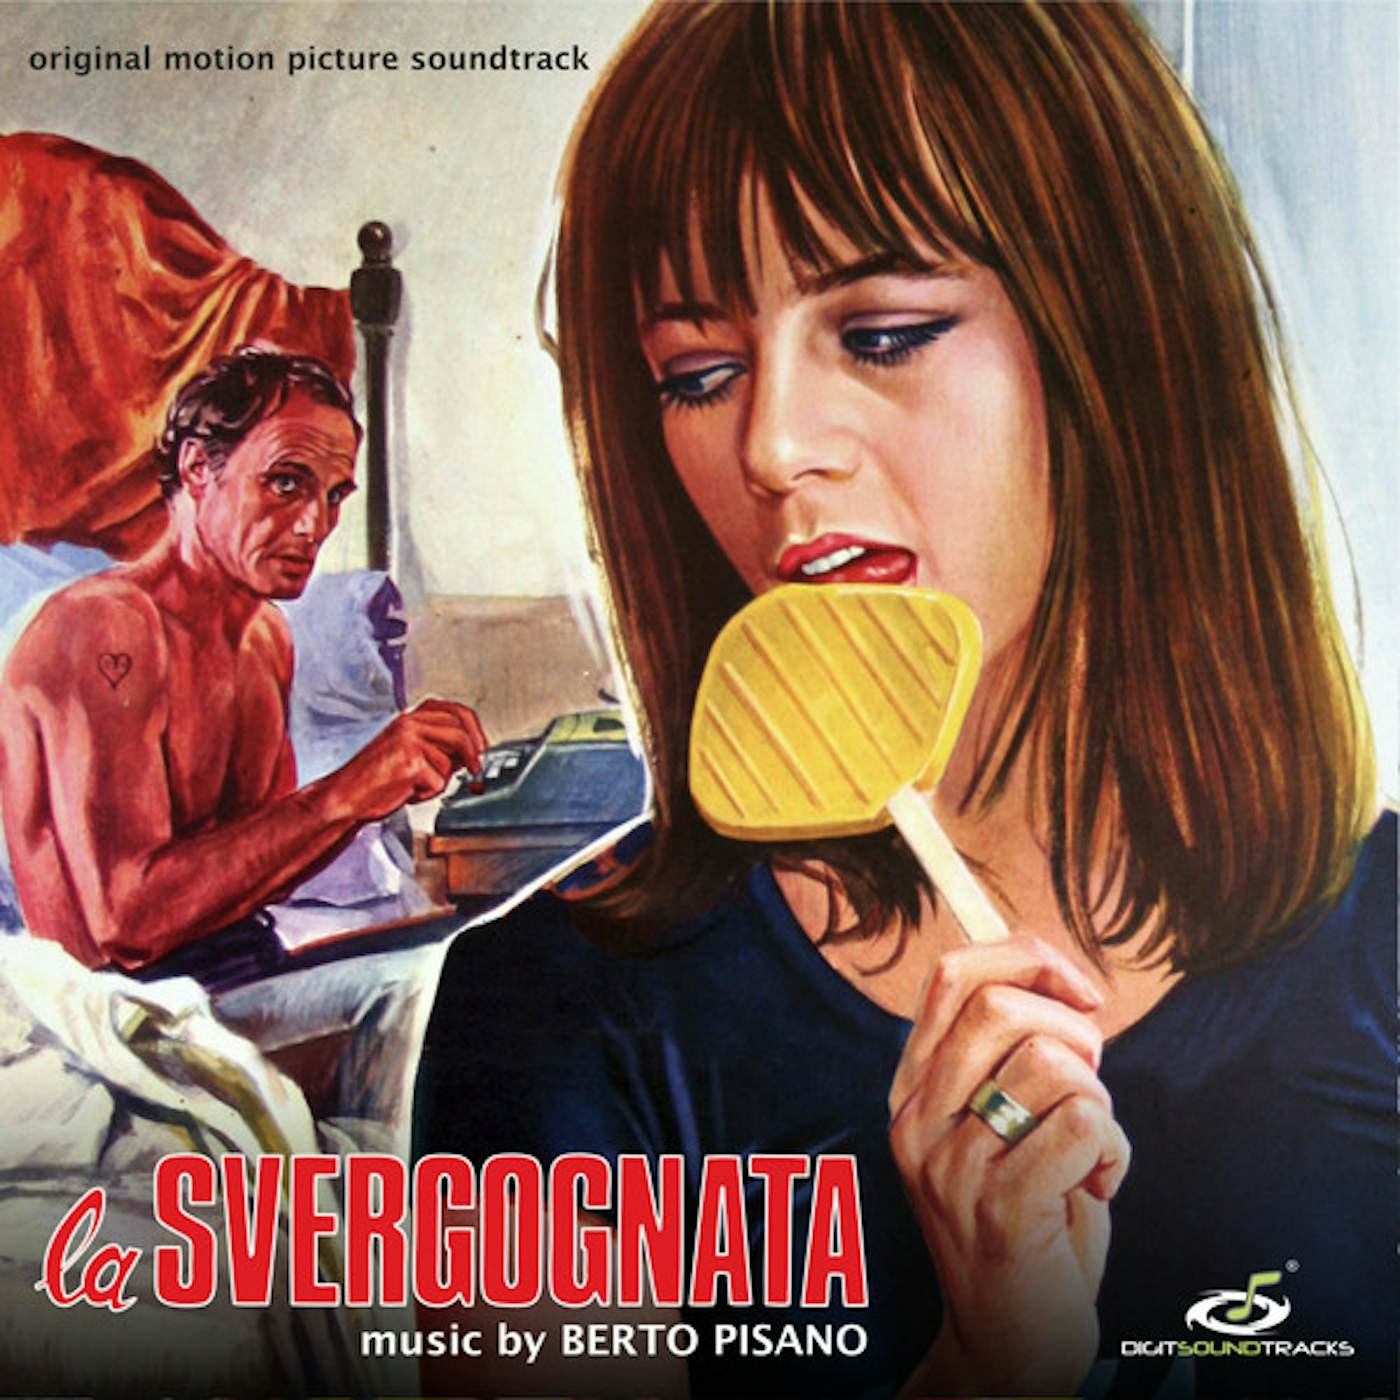 Berto Pisano SVERGOGNATA - Original Soundtrack Vinyl Record